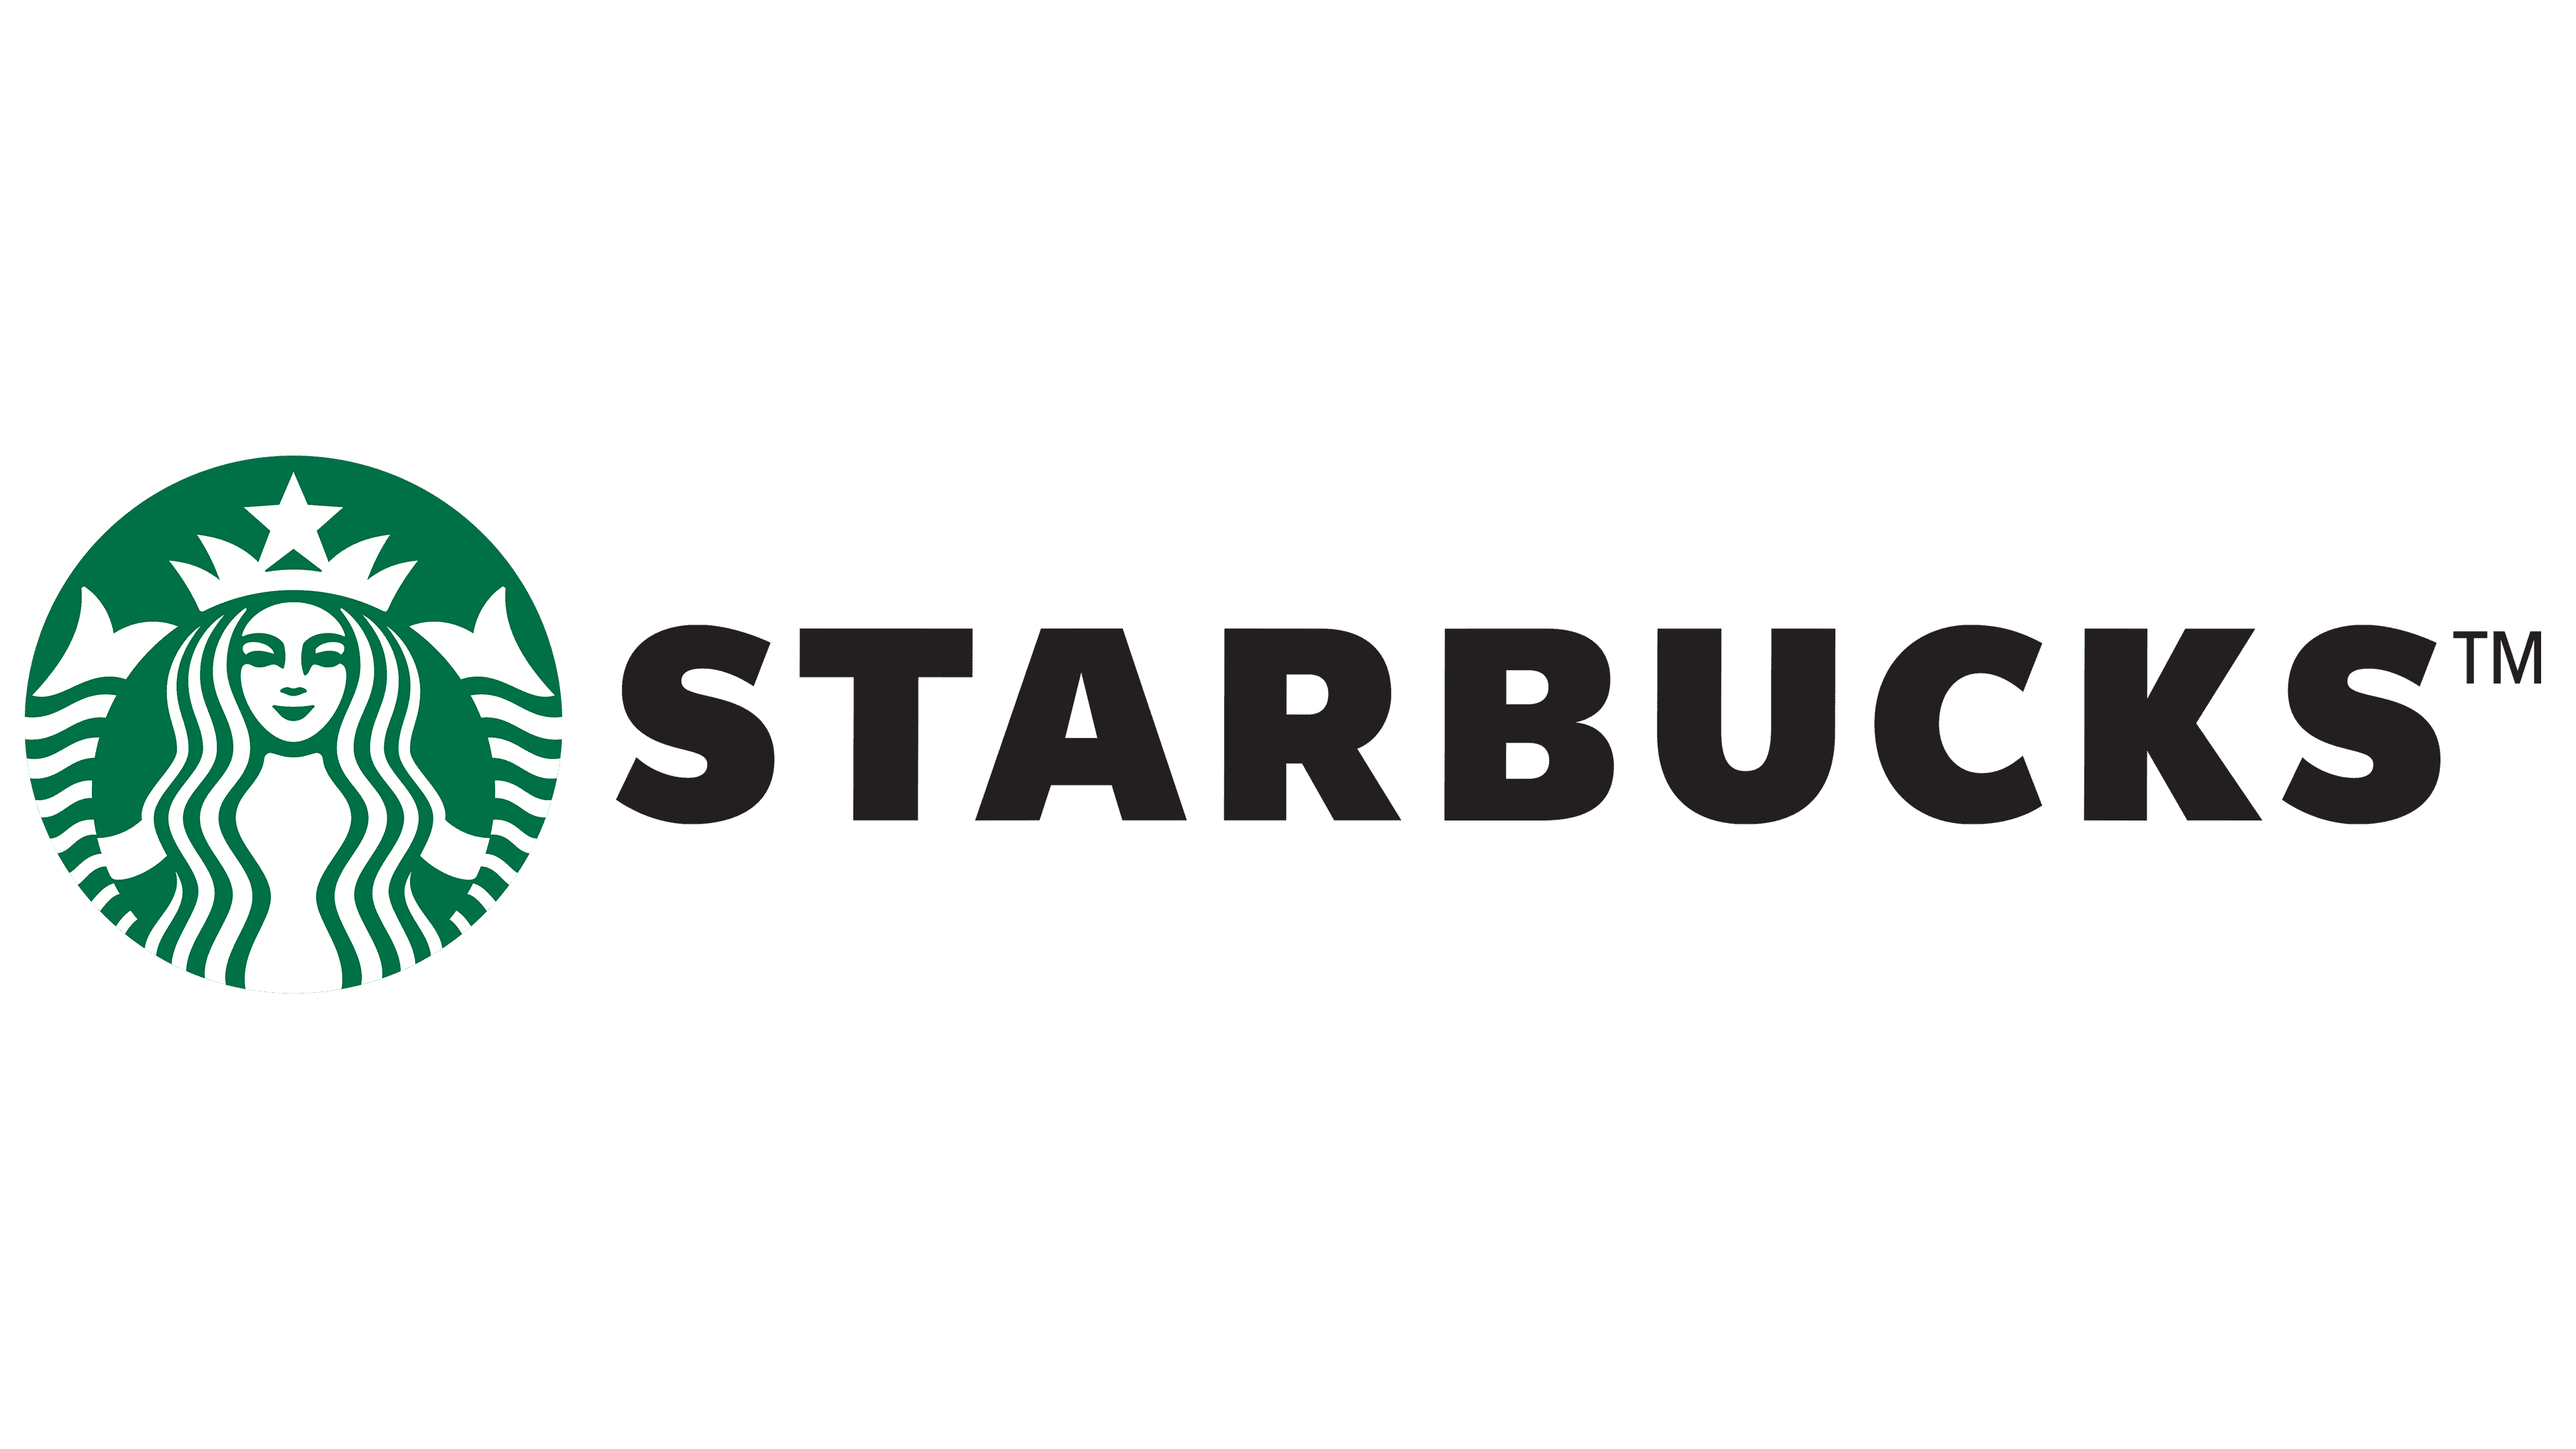 Starbucks Help Center home page